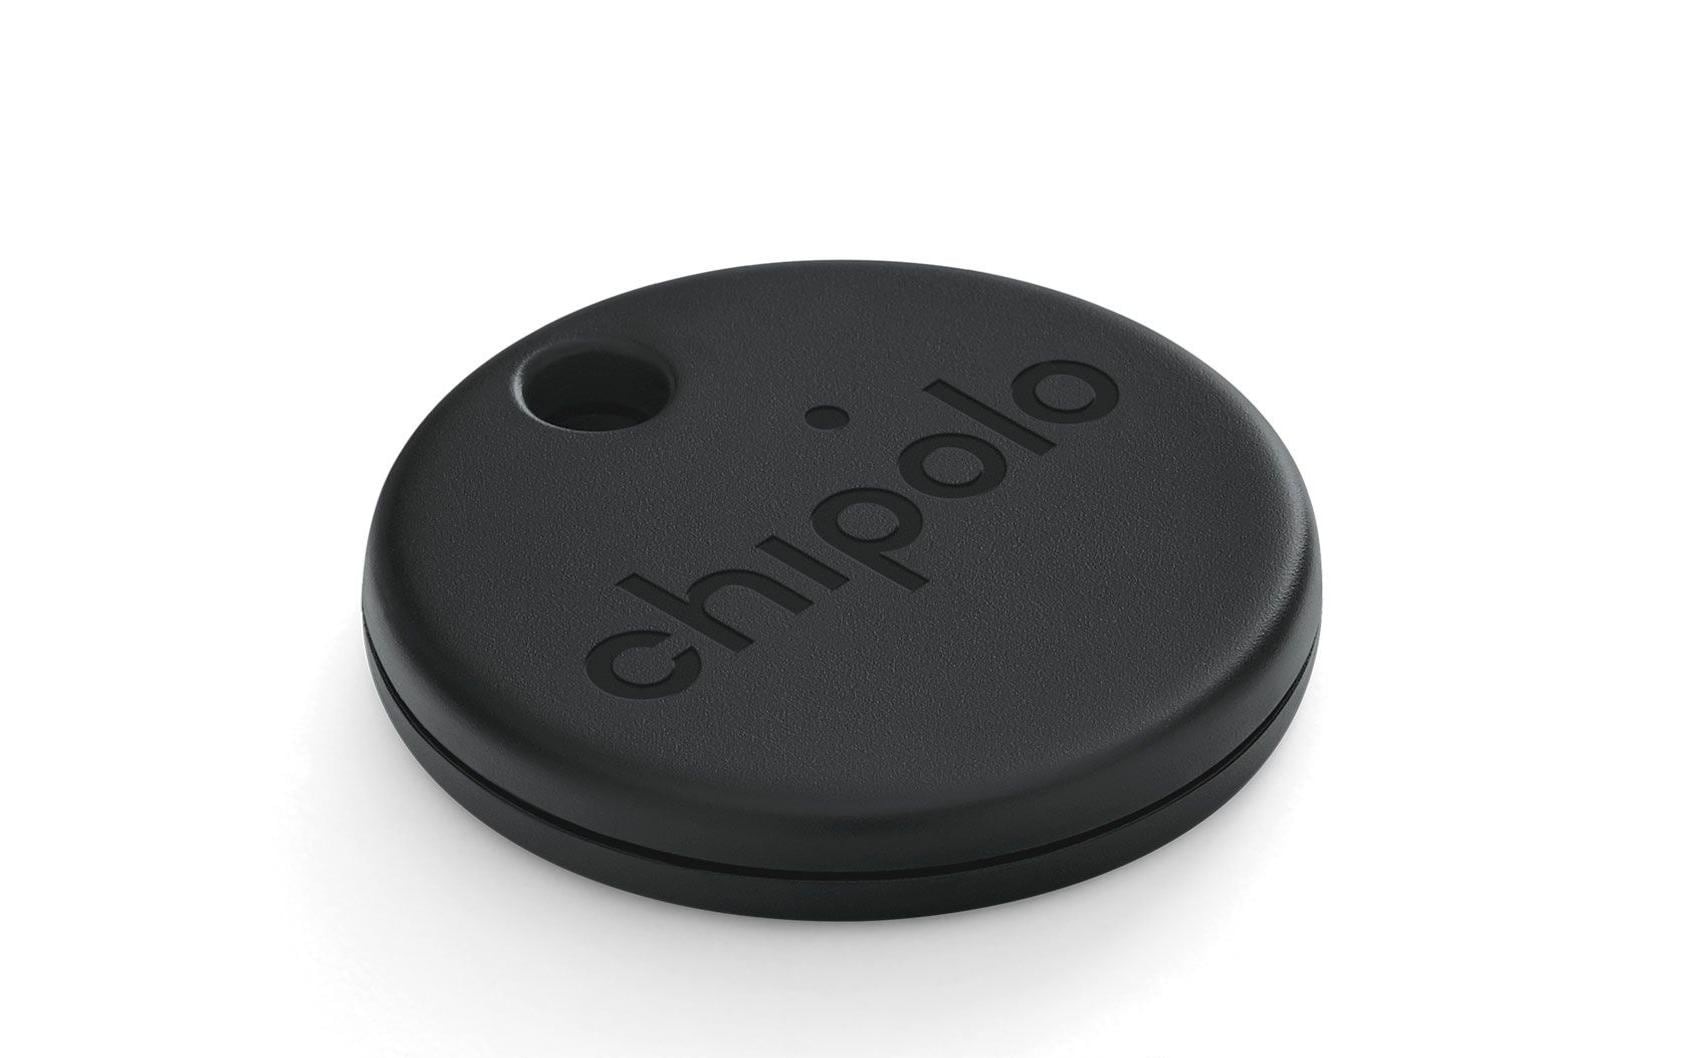 Chipolo GPS-Ortungsgerät »Spot«